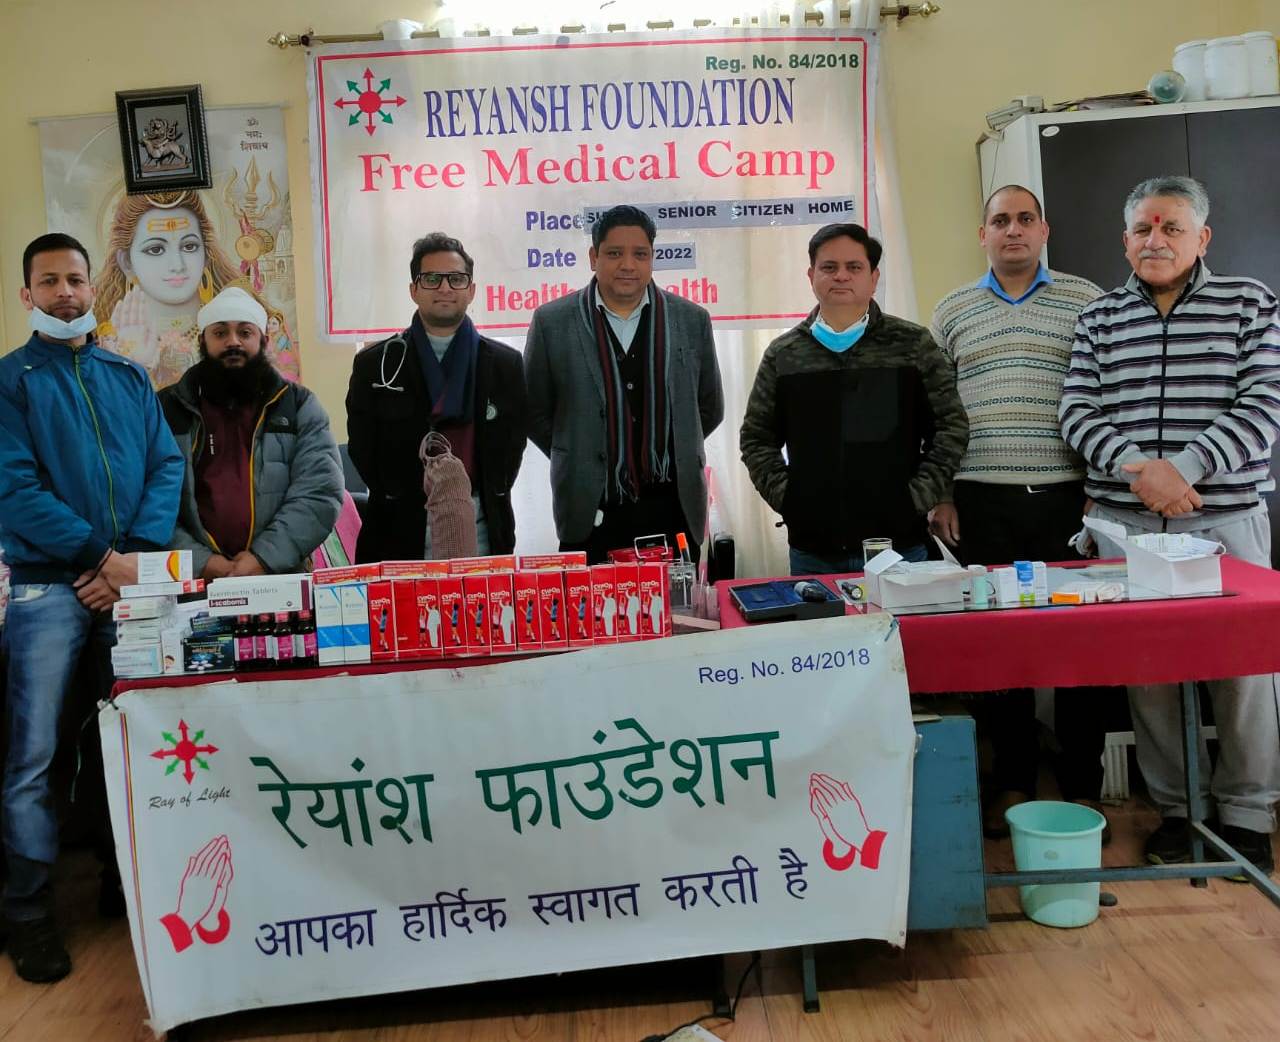 Free Medical Camp by Reyansh foundation